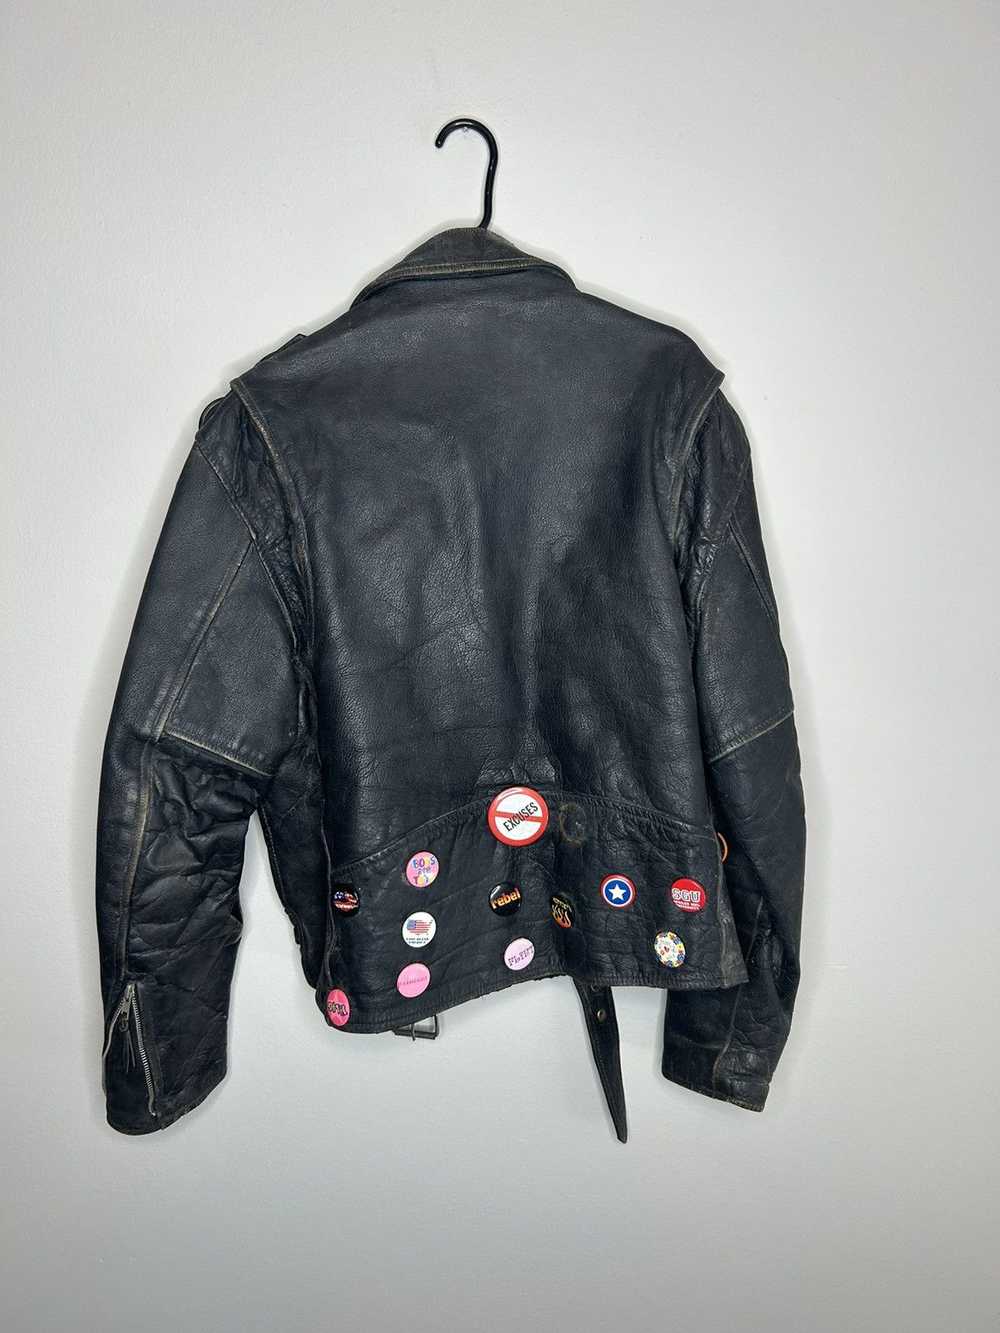 Vintage Vintage button pin leather jacket - image 2